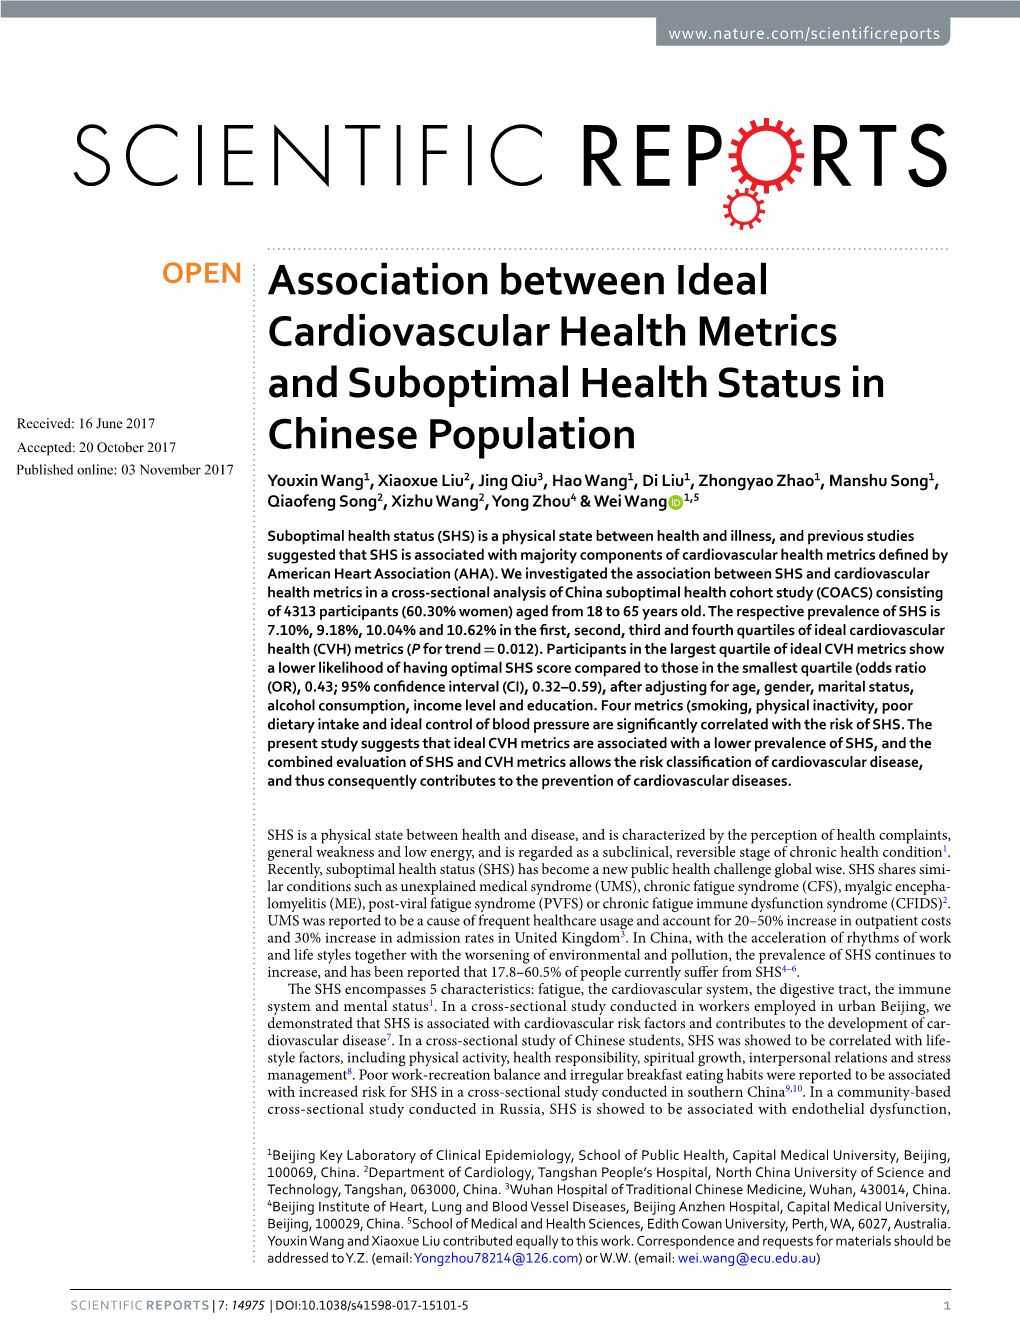 Association Between Ideal Cardiovascular Health Metrics And